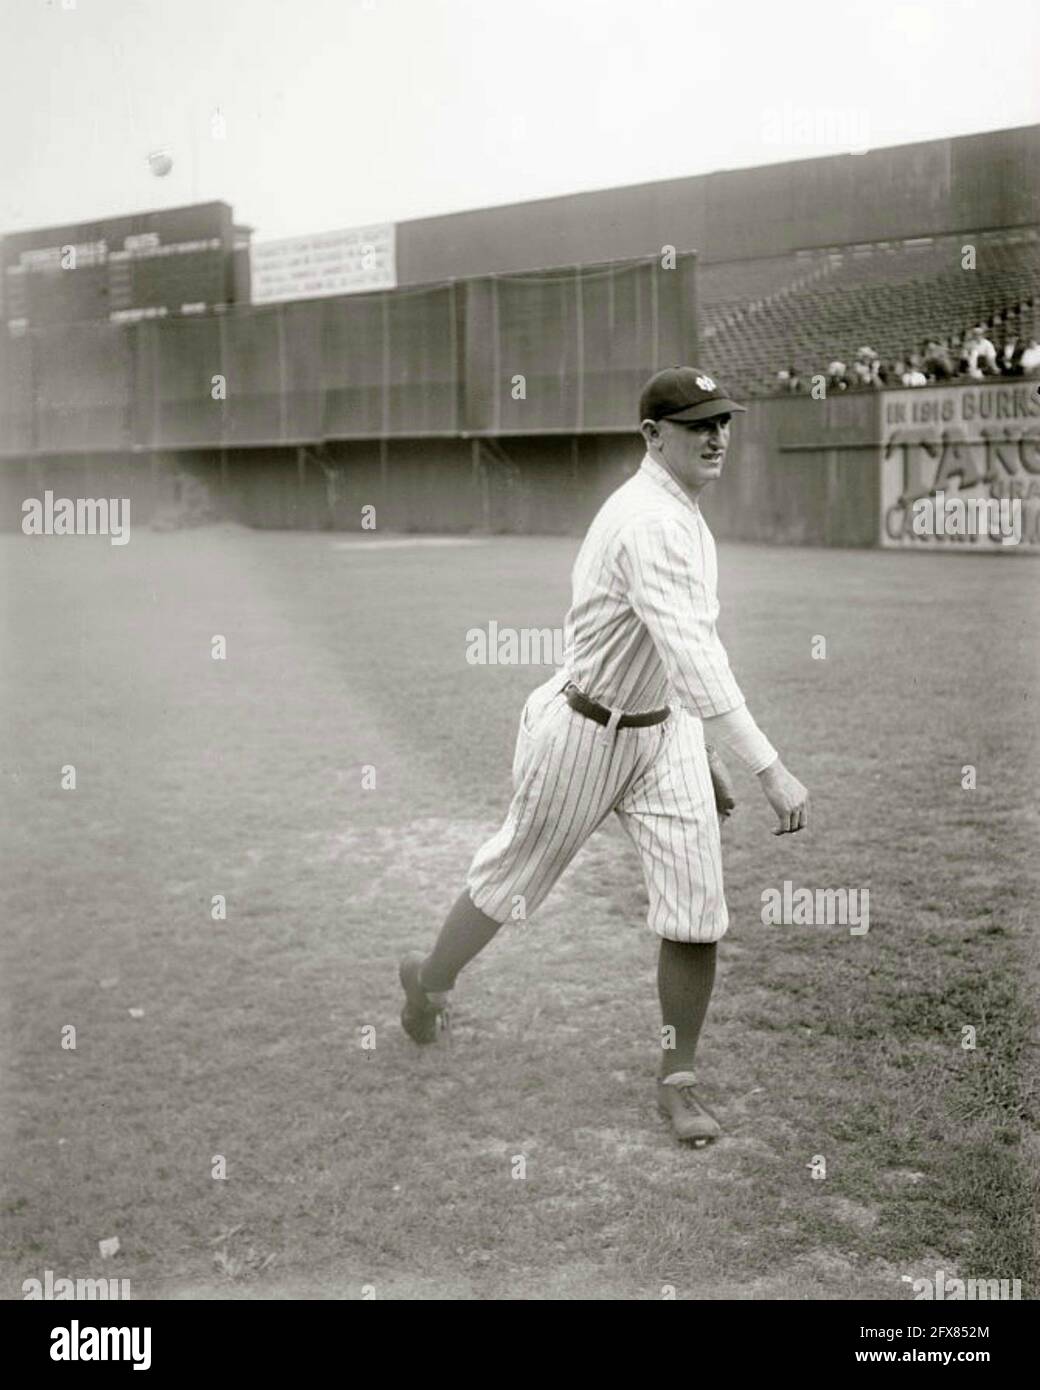 Carl Mays, Yankees de New York 1922. Banque D'Images